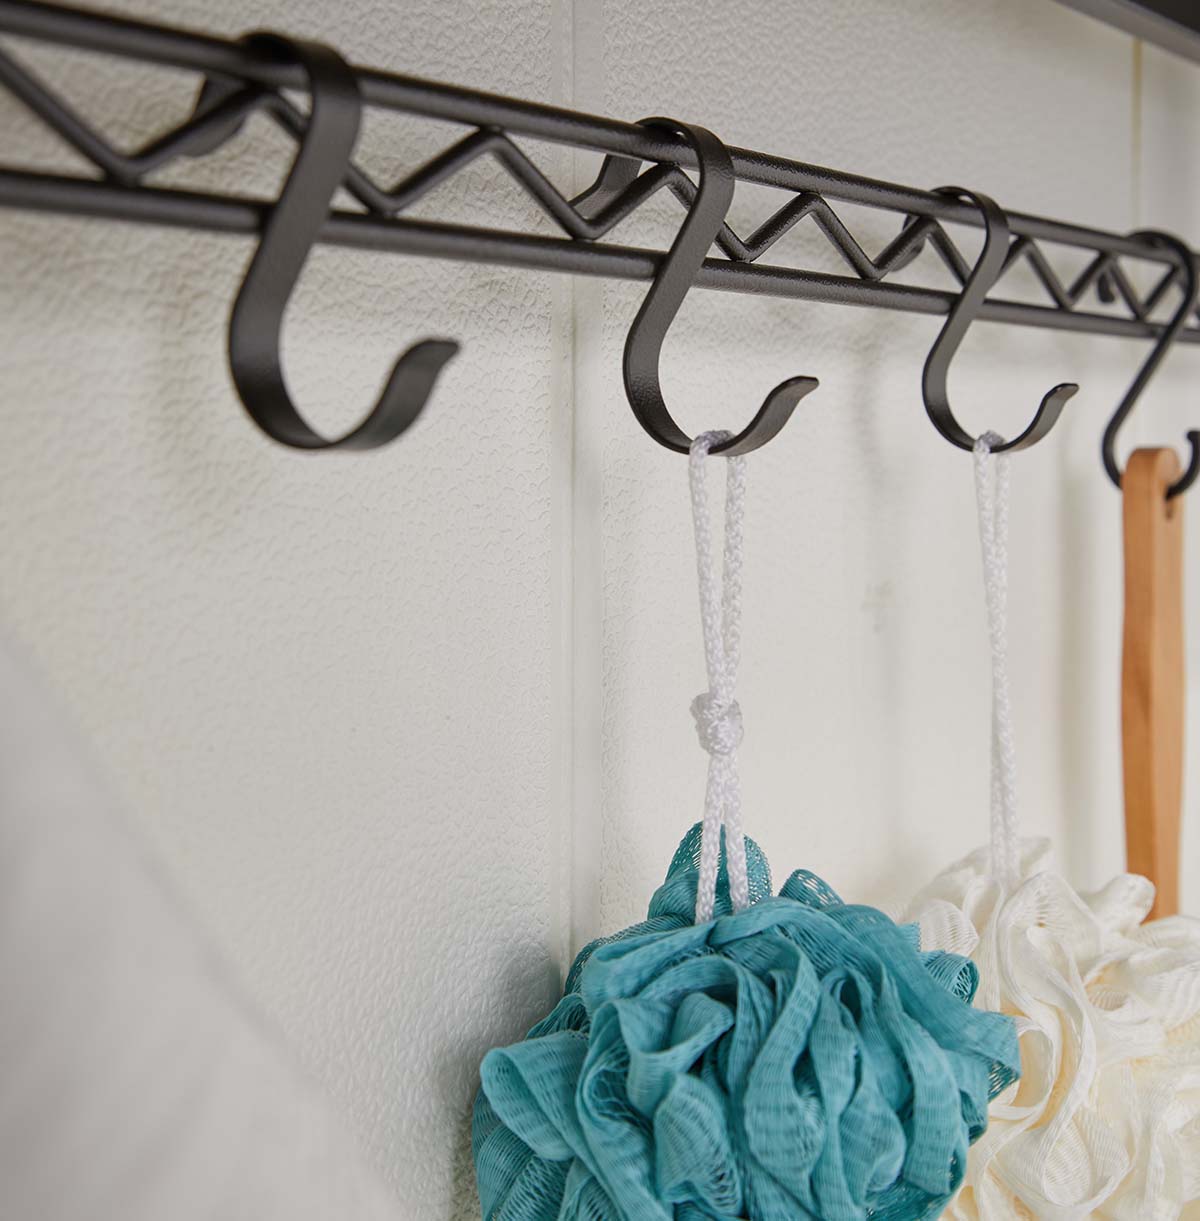 3-Tier Washing Machine Storage Rack with Hanging Rail and Hooks